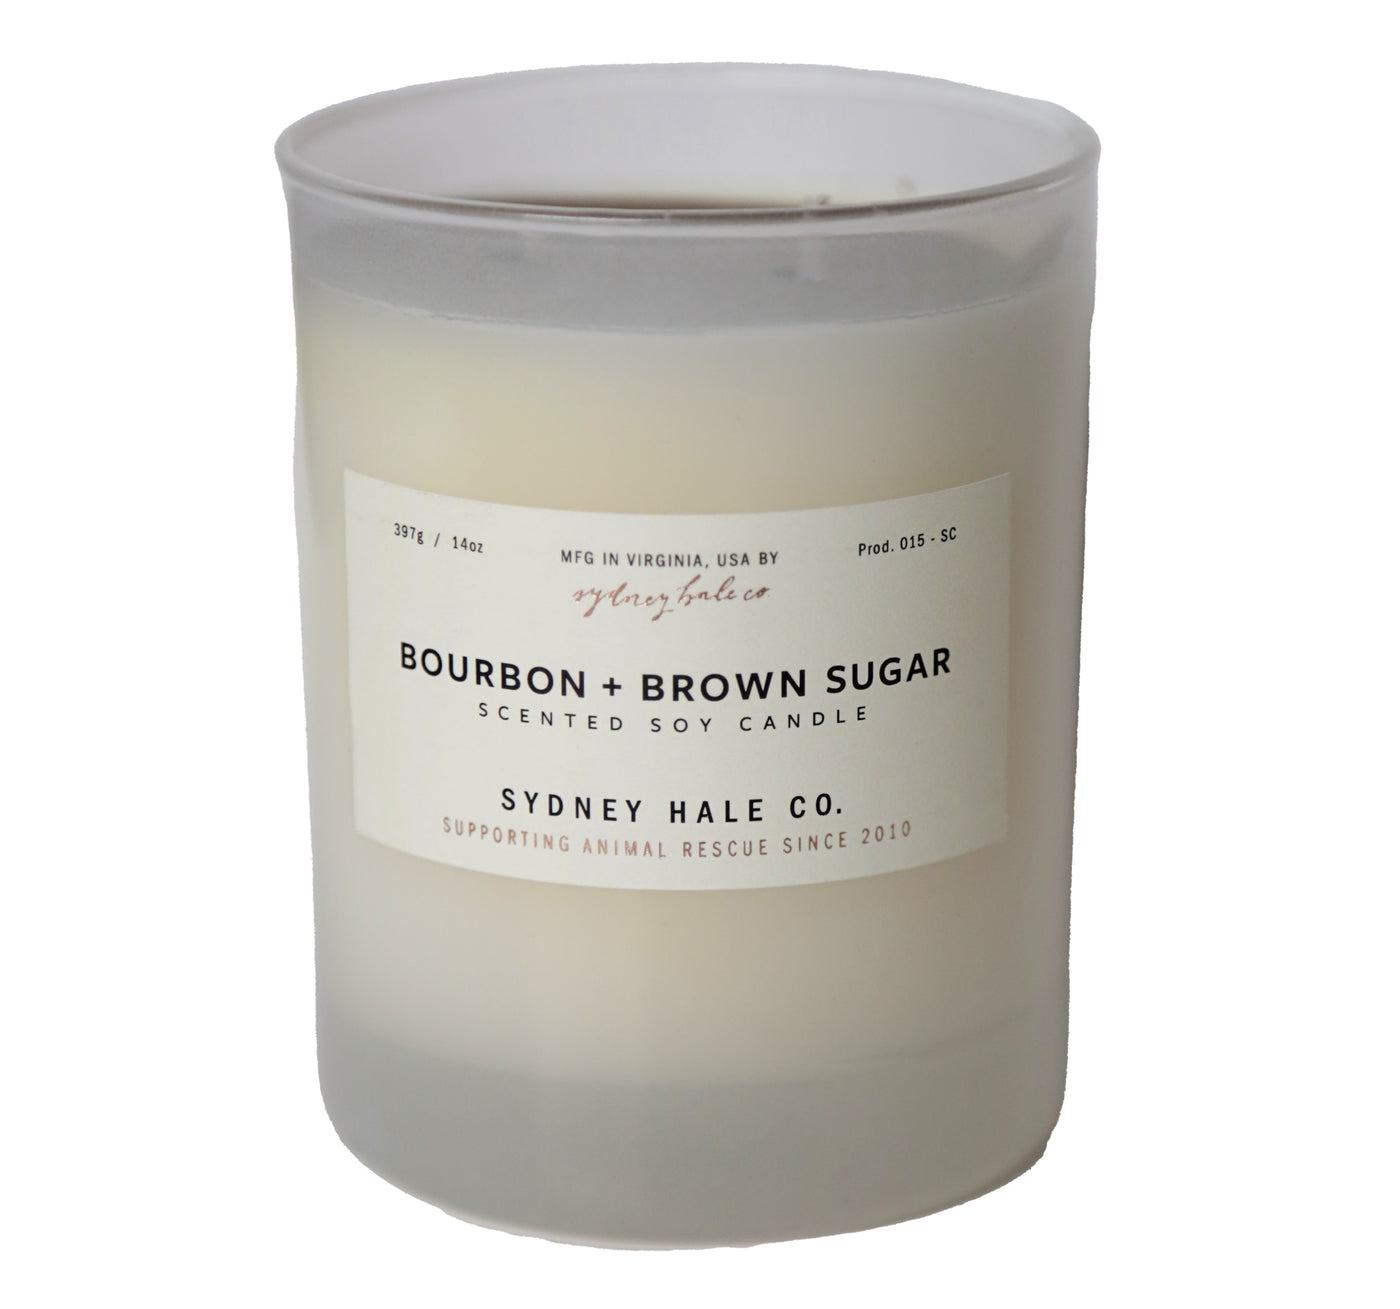 Sydney Hale Co- Bourbon + Brown Sugar